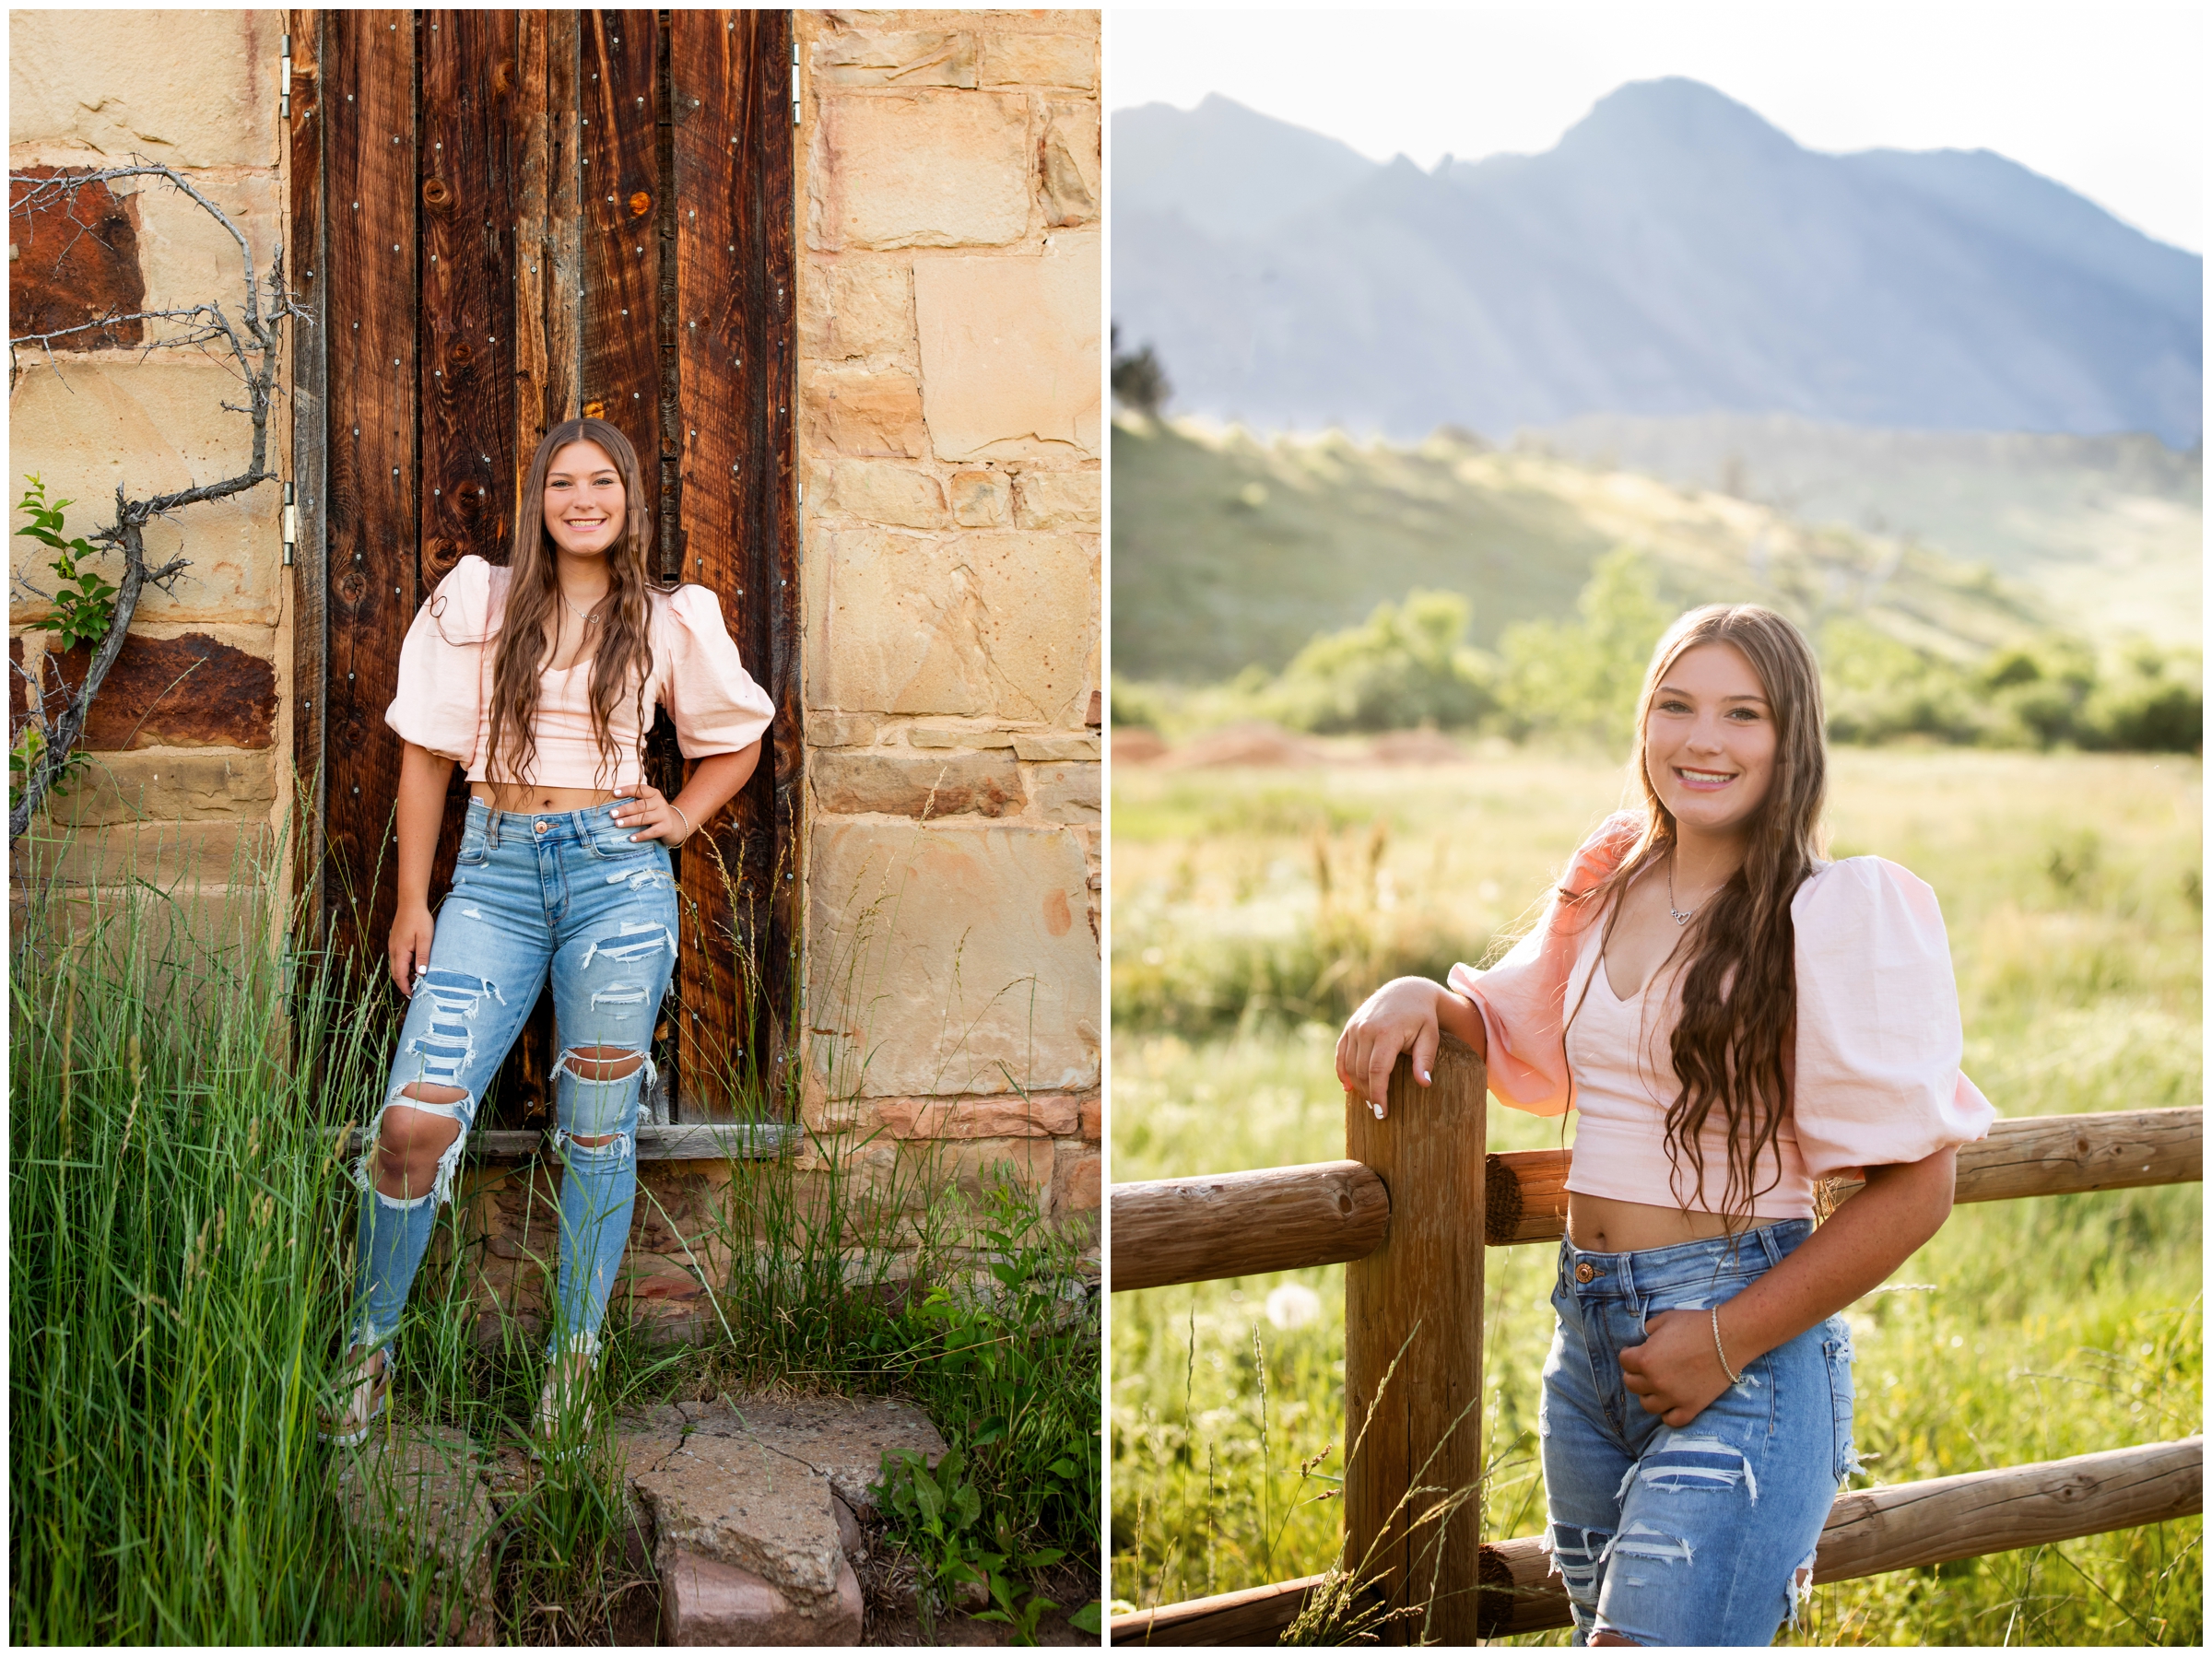 Boulder senior portrait images at South Mesa Trail by Colorado photographer Plum Pretty Photography